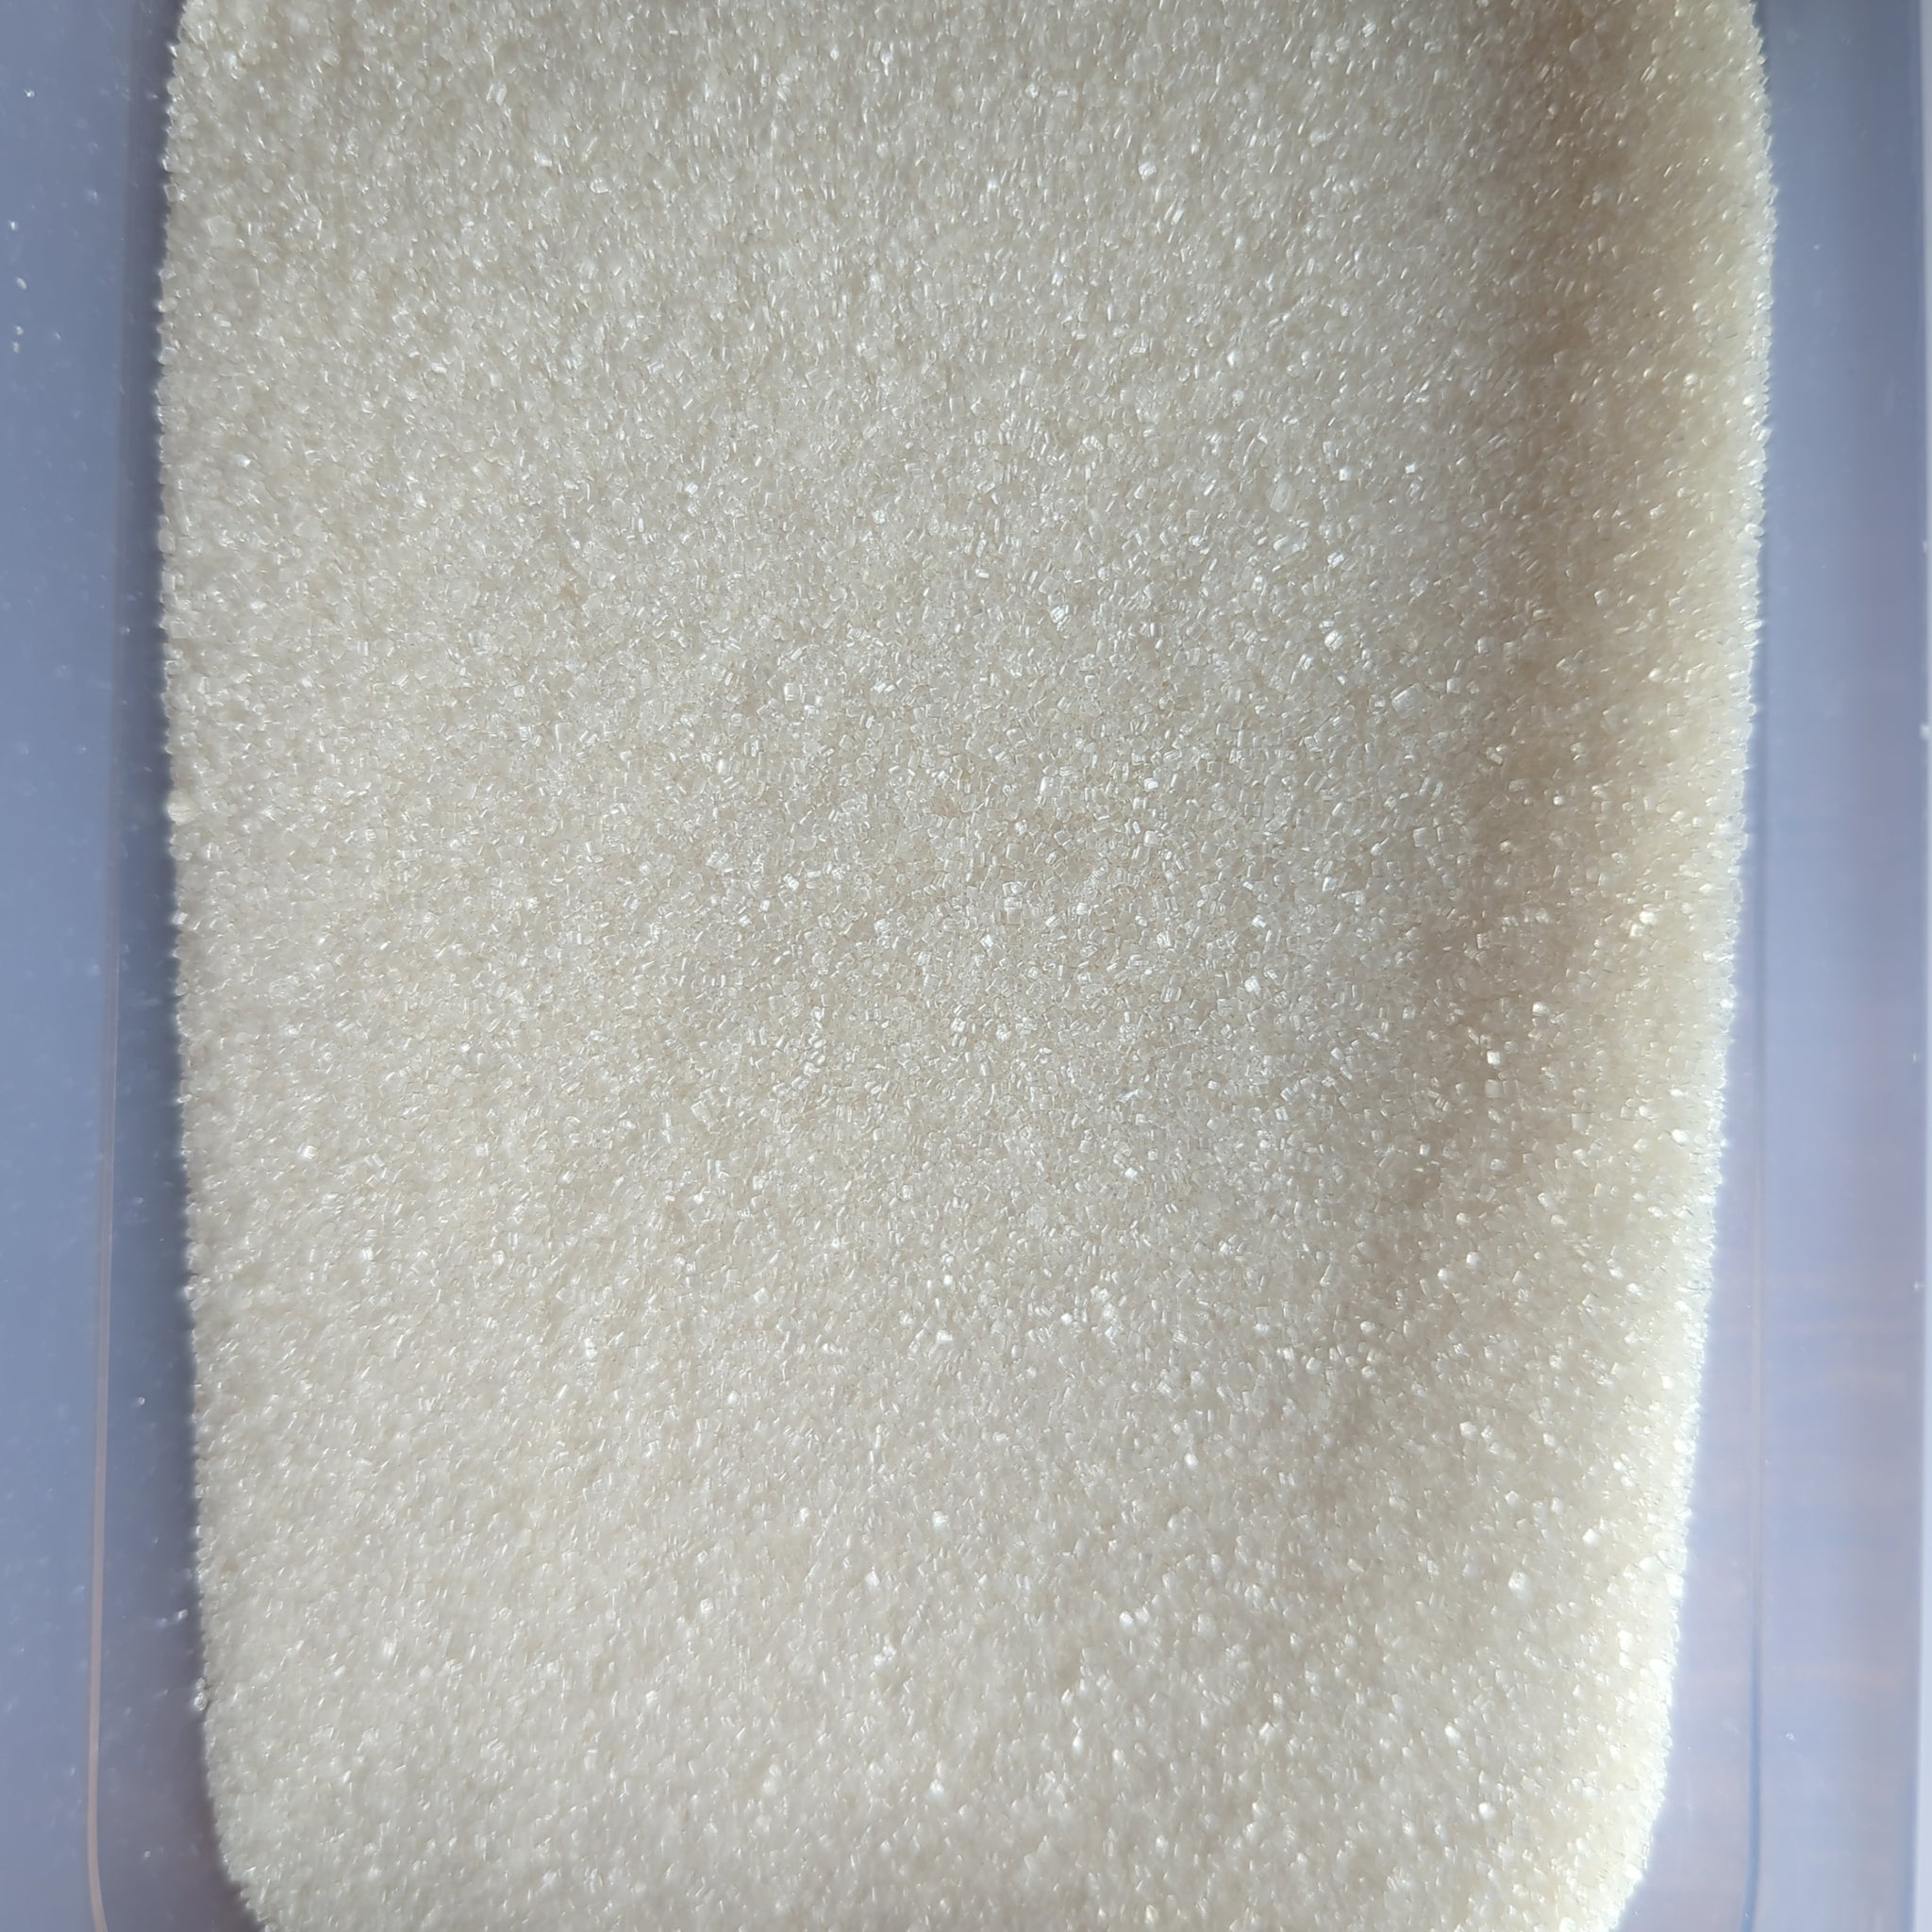 Granulated Sugar per 100g BBE: OCT 25